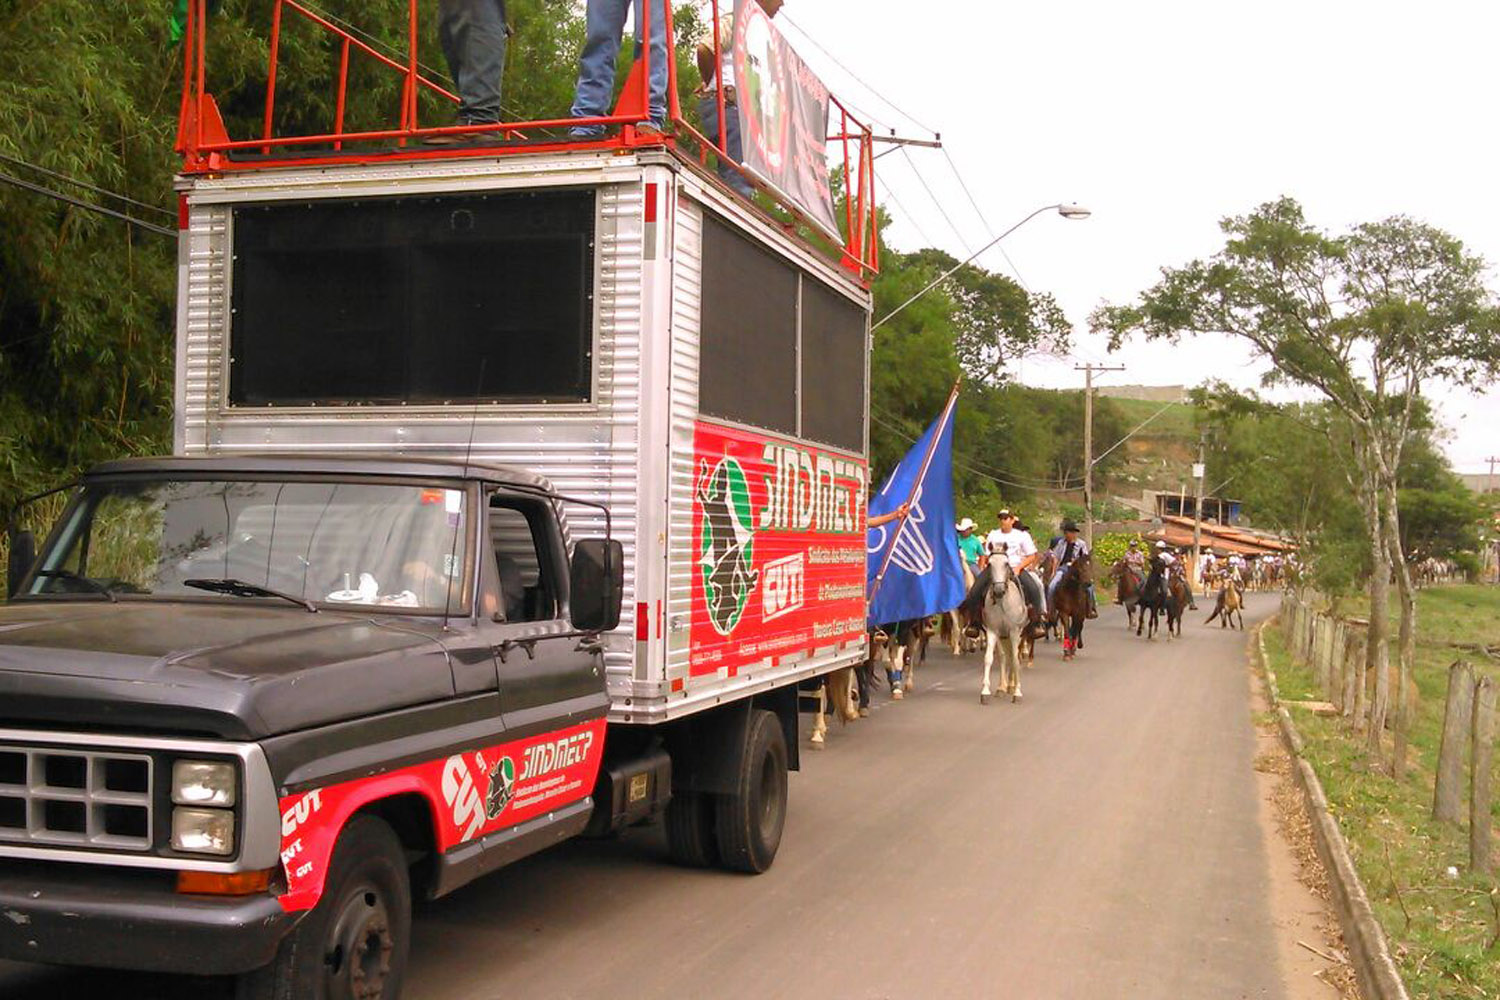 Sindicato dos Metalúrgicos apoia cavalgada religiosa em Pinda